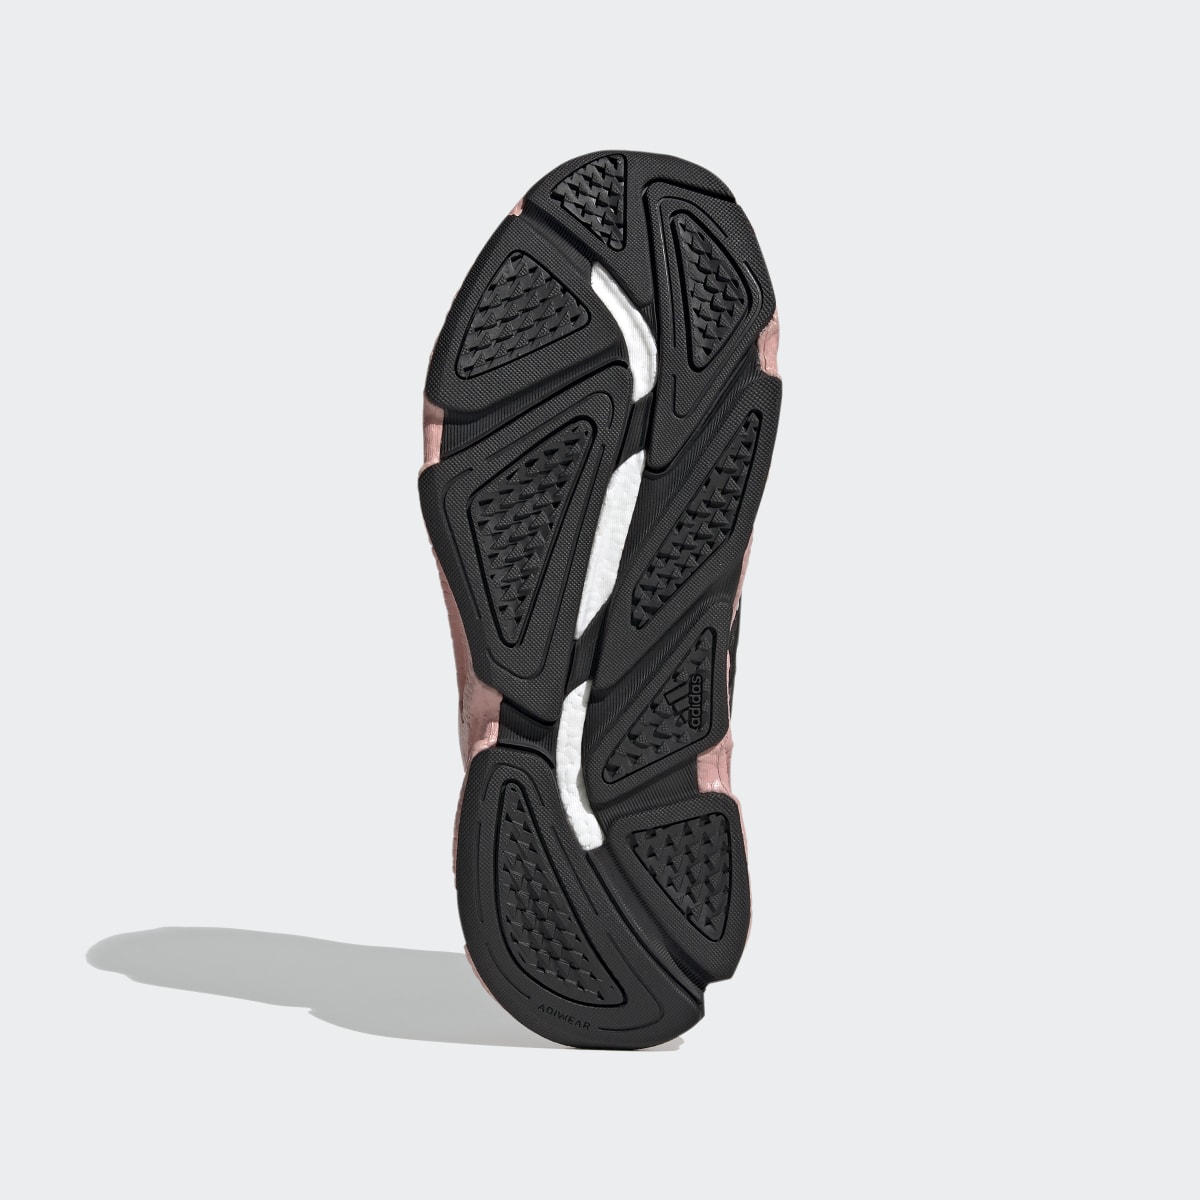 Adidas Chaussure Karlie Kloss X9000. 6